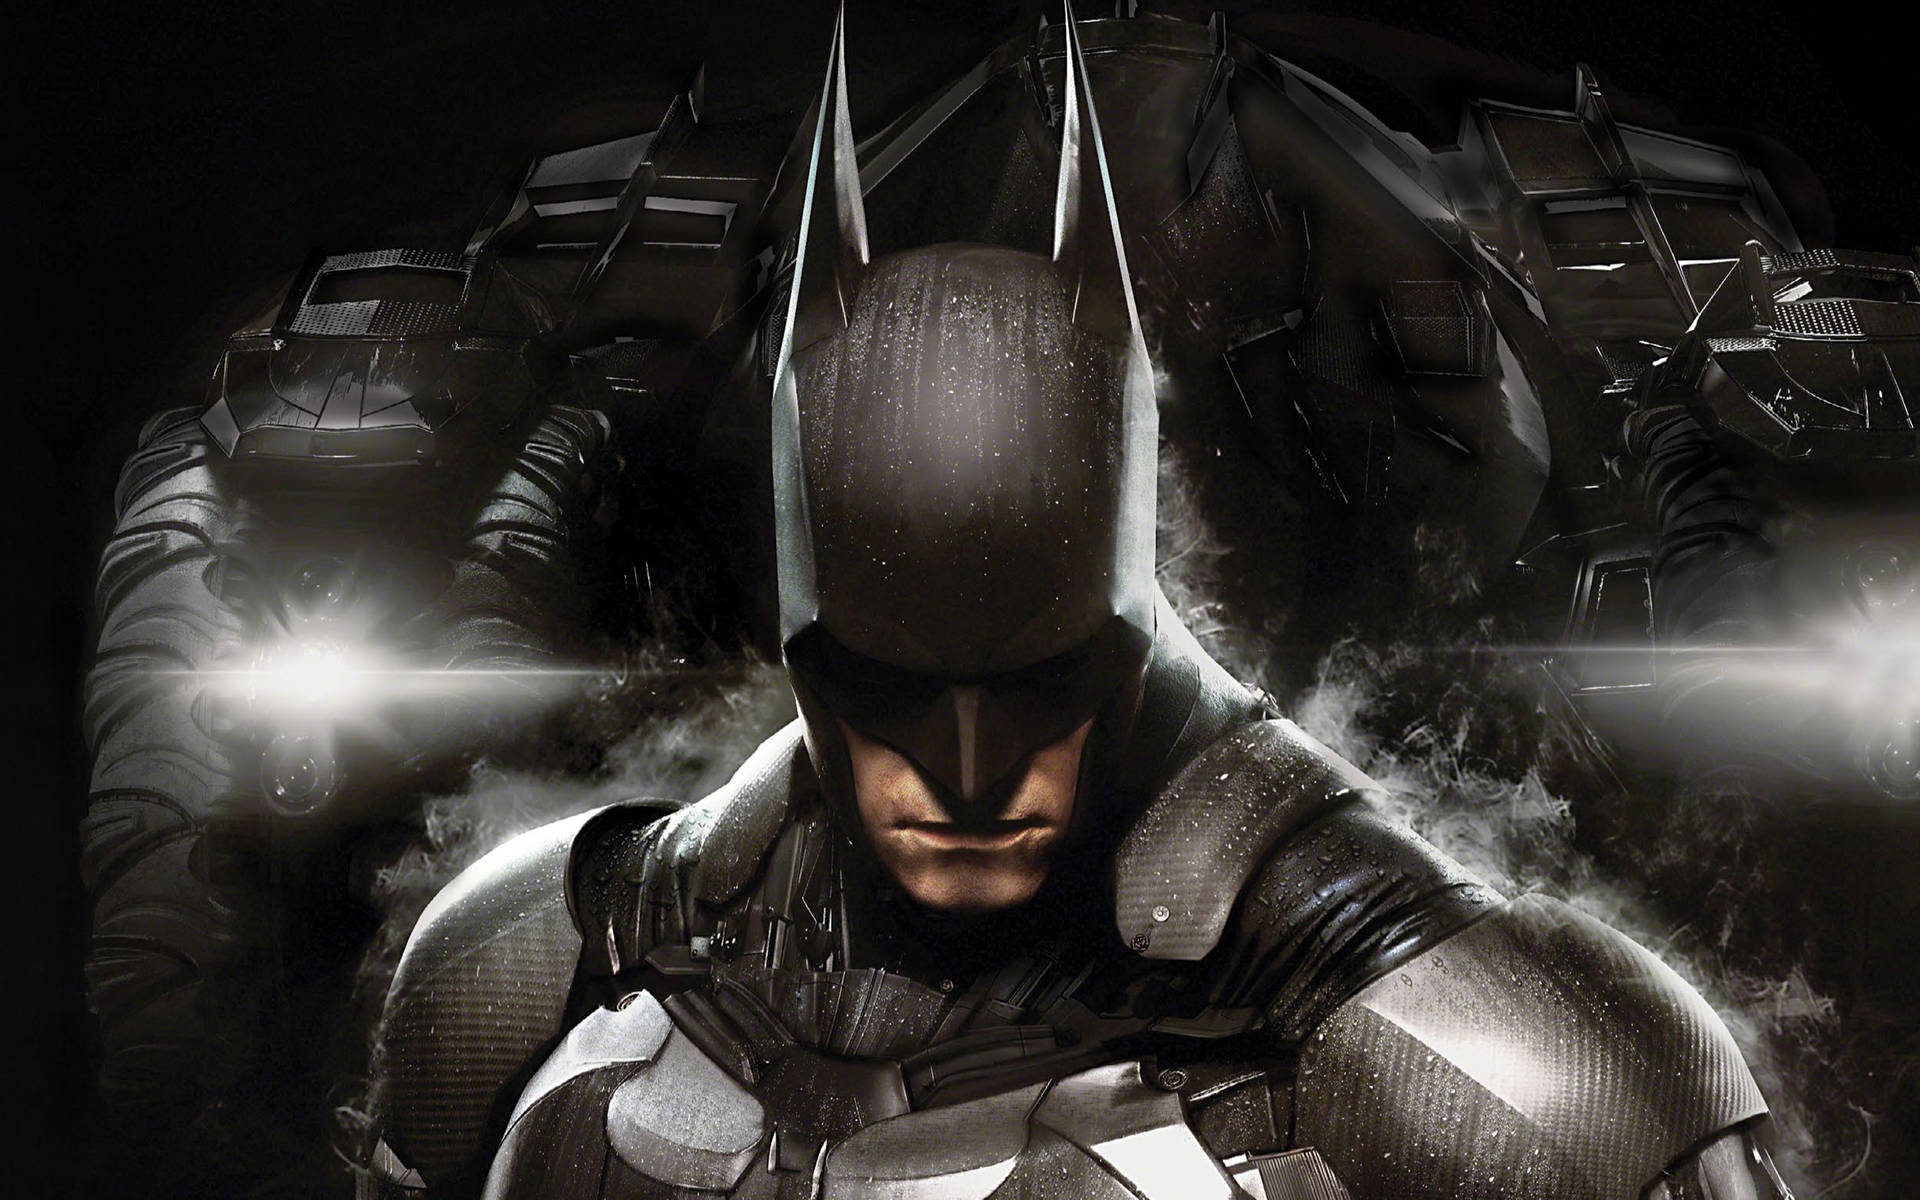 Batman Arkham City Poster